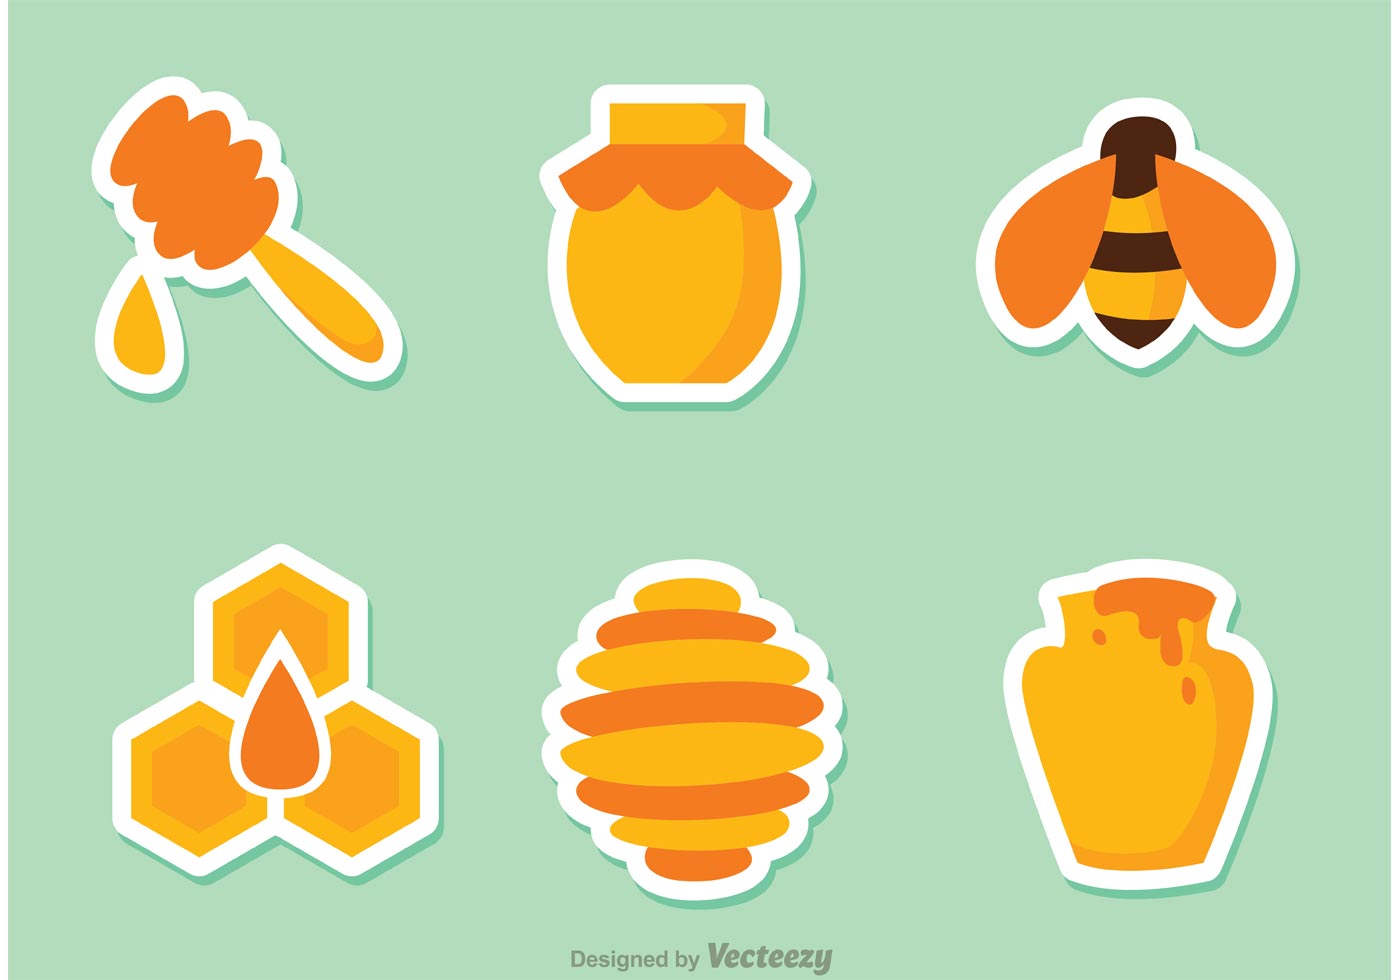 Honeycomb Free Vector Art - (279 Free Downloads)